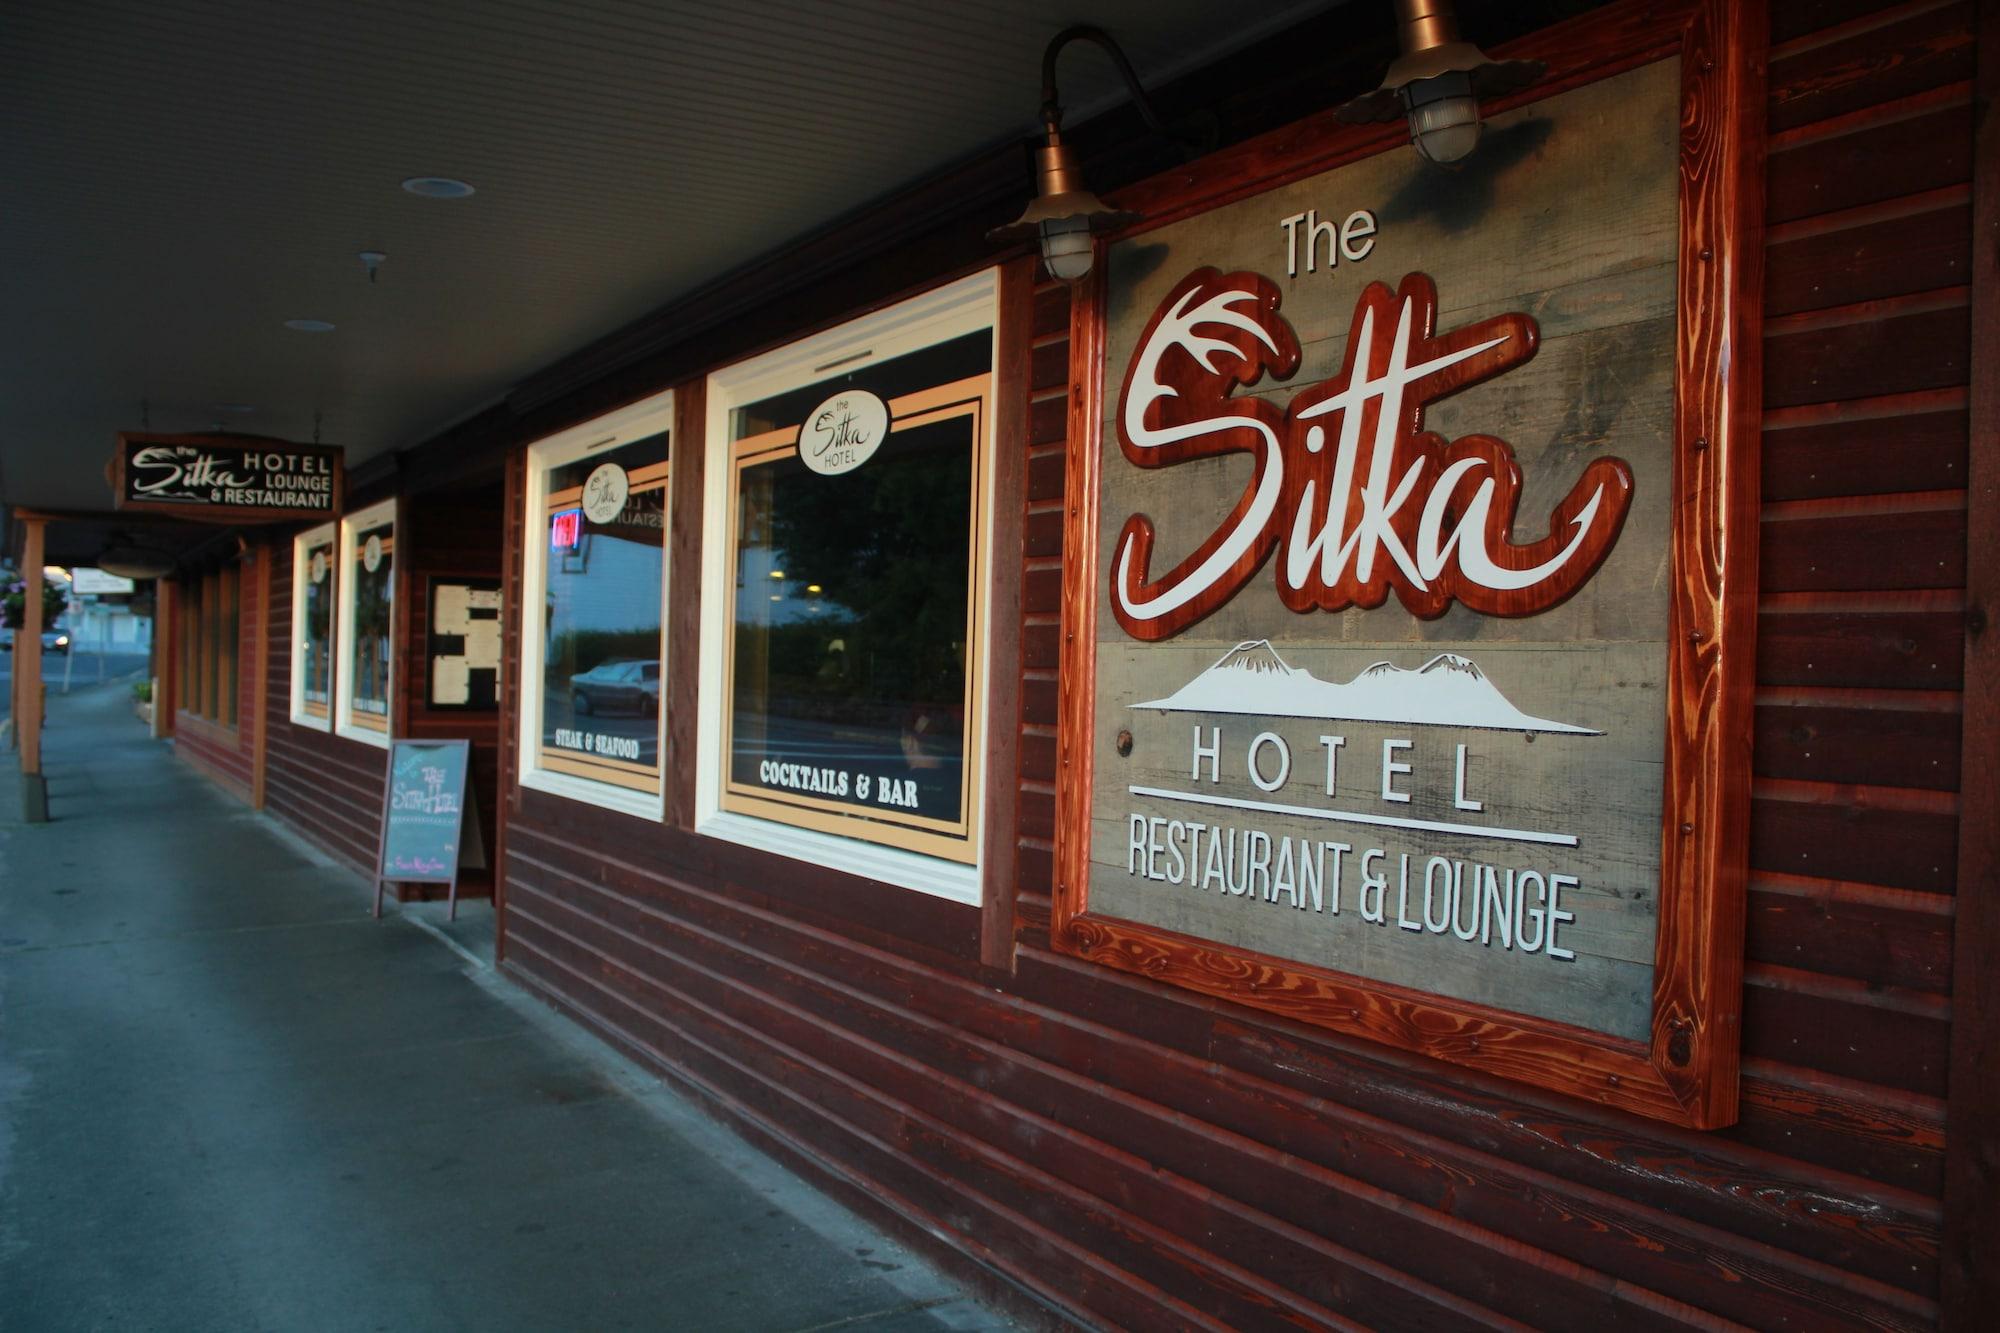 Sitka Hotel Exterior photo